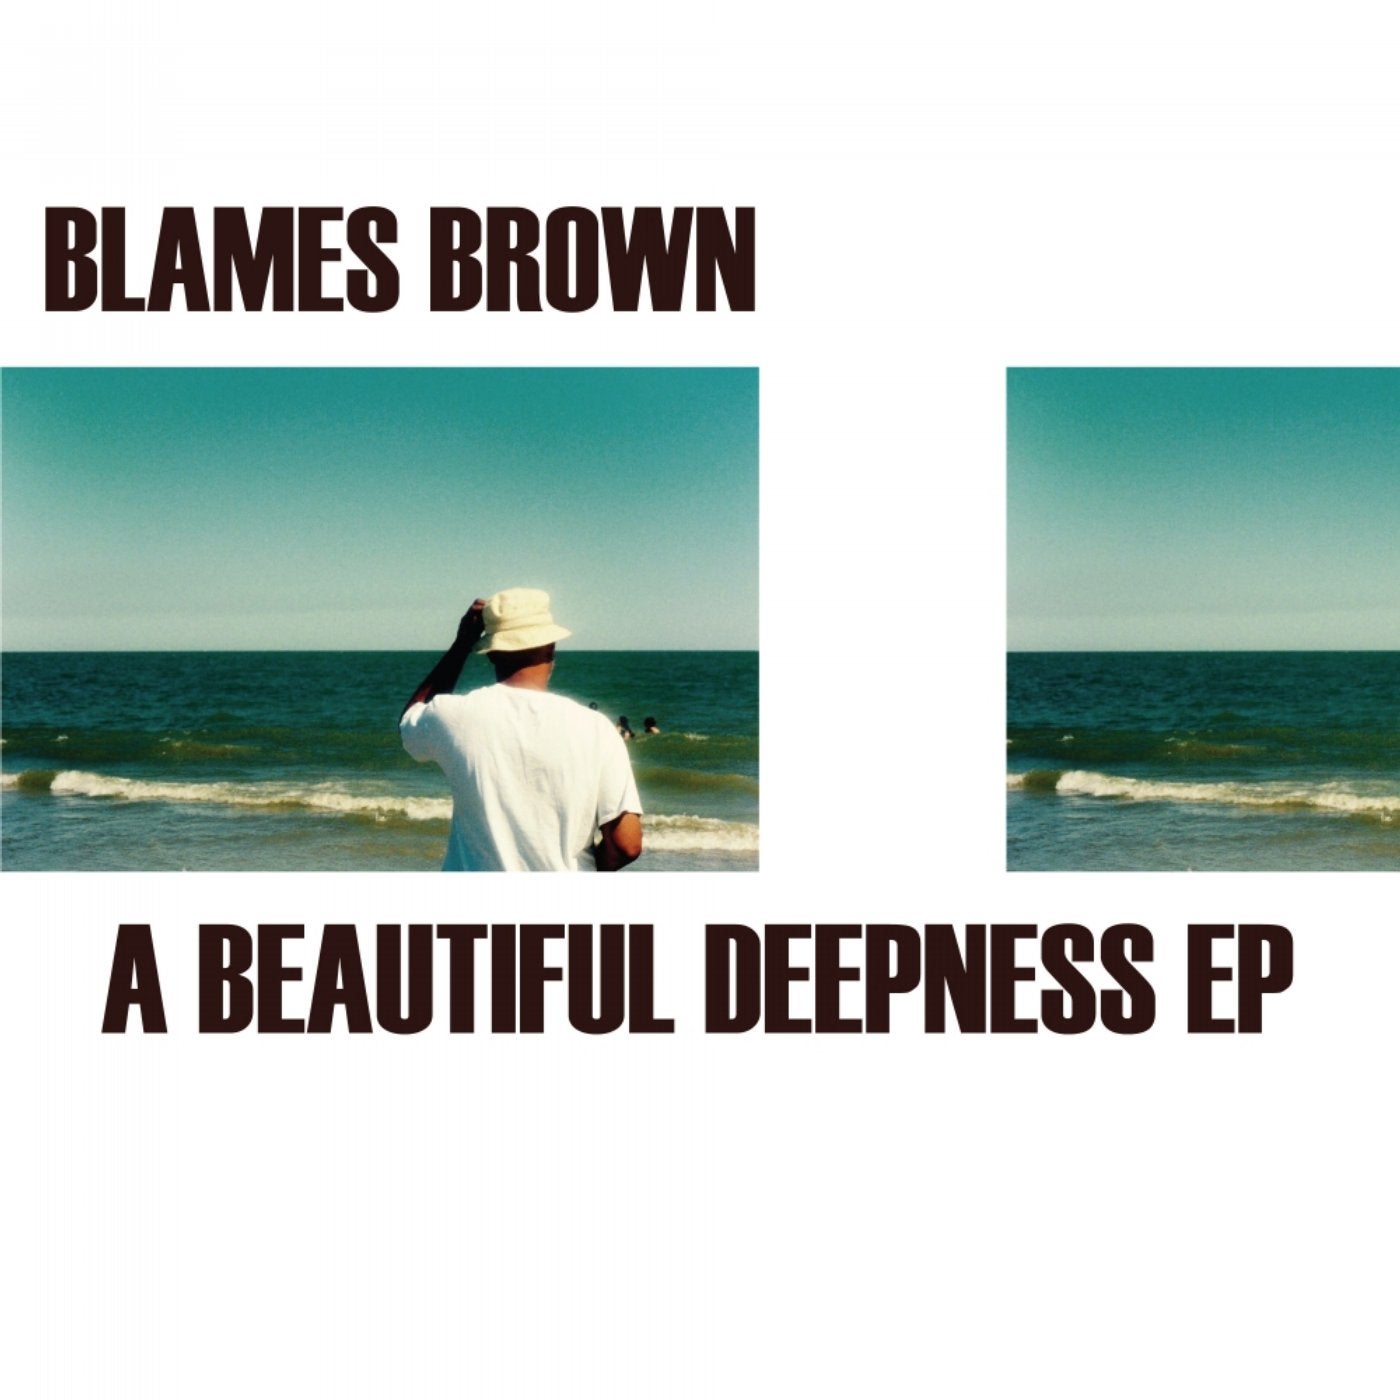 A Beautiful Deepness EP